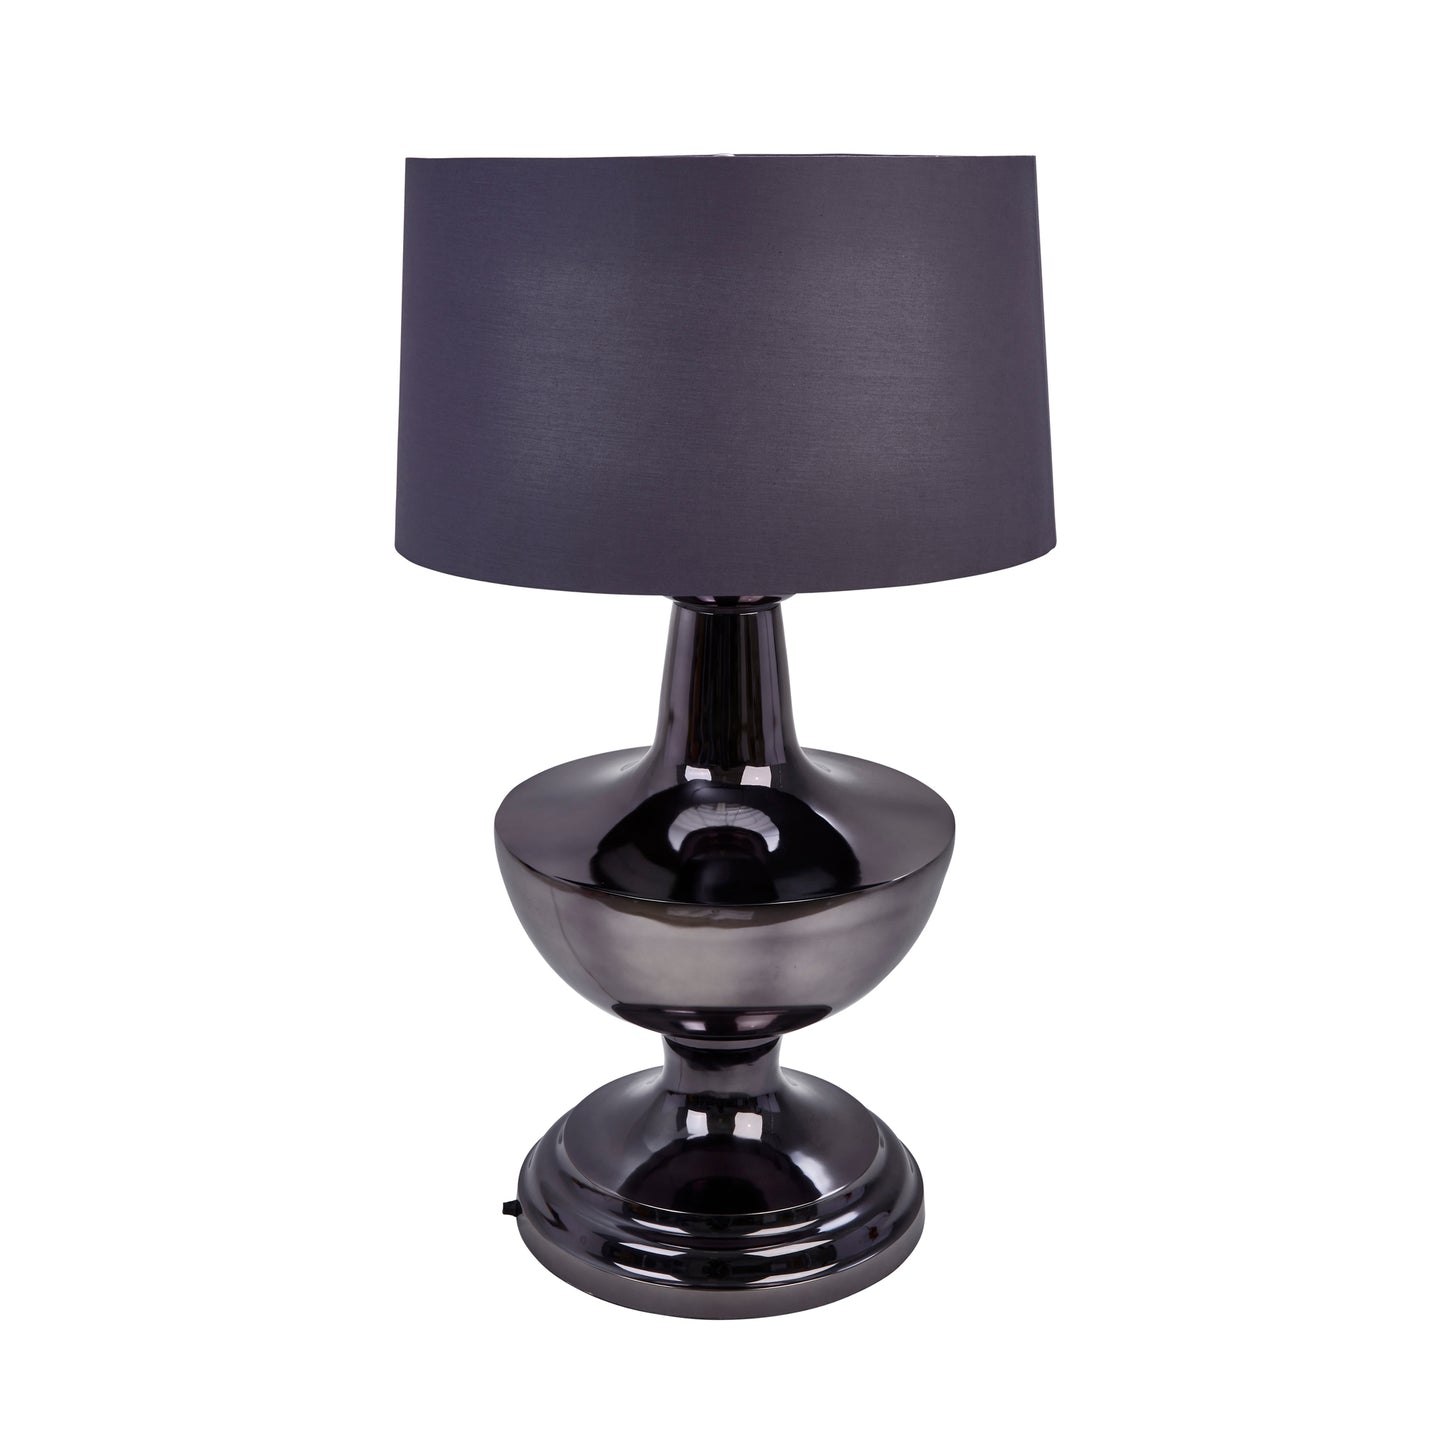 STAINLESS STEEL 33" TABLE LAMP, BLACK